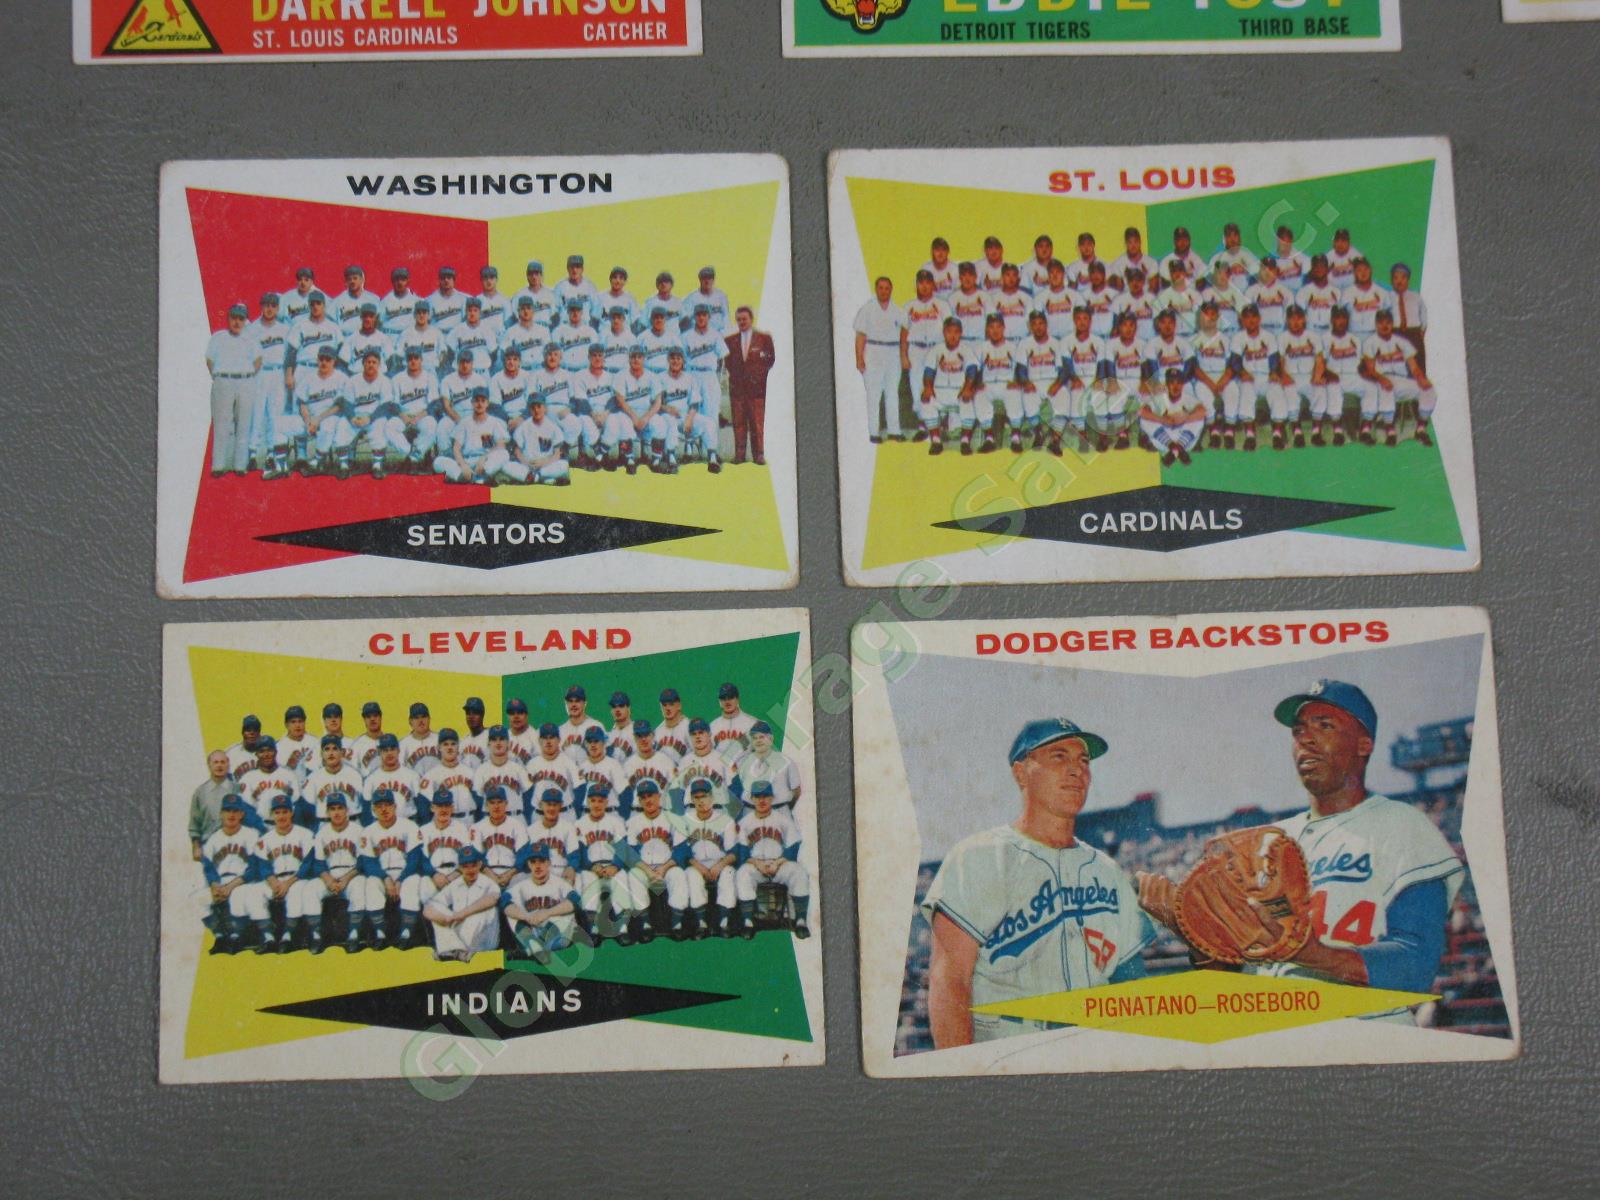 165 VtgTopps 1960 Baseball Card Collection Lot Rookies Teams Senators Braves NR! 2